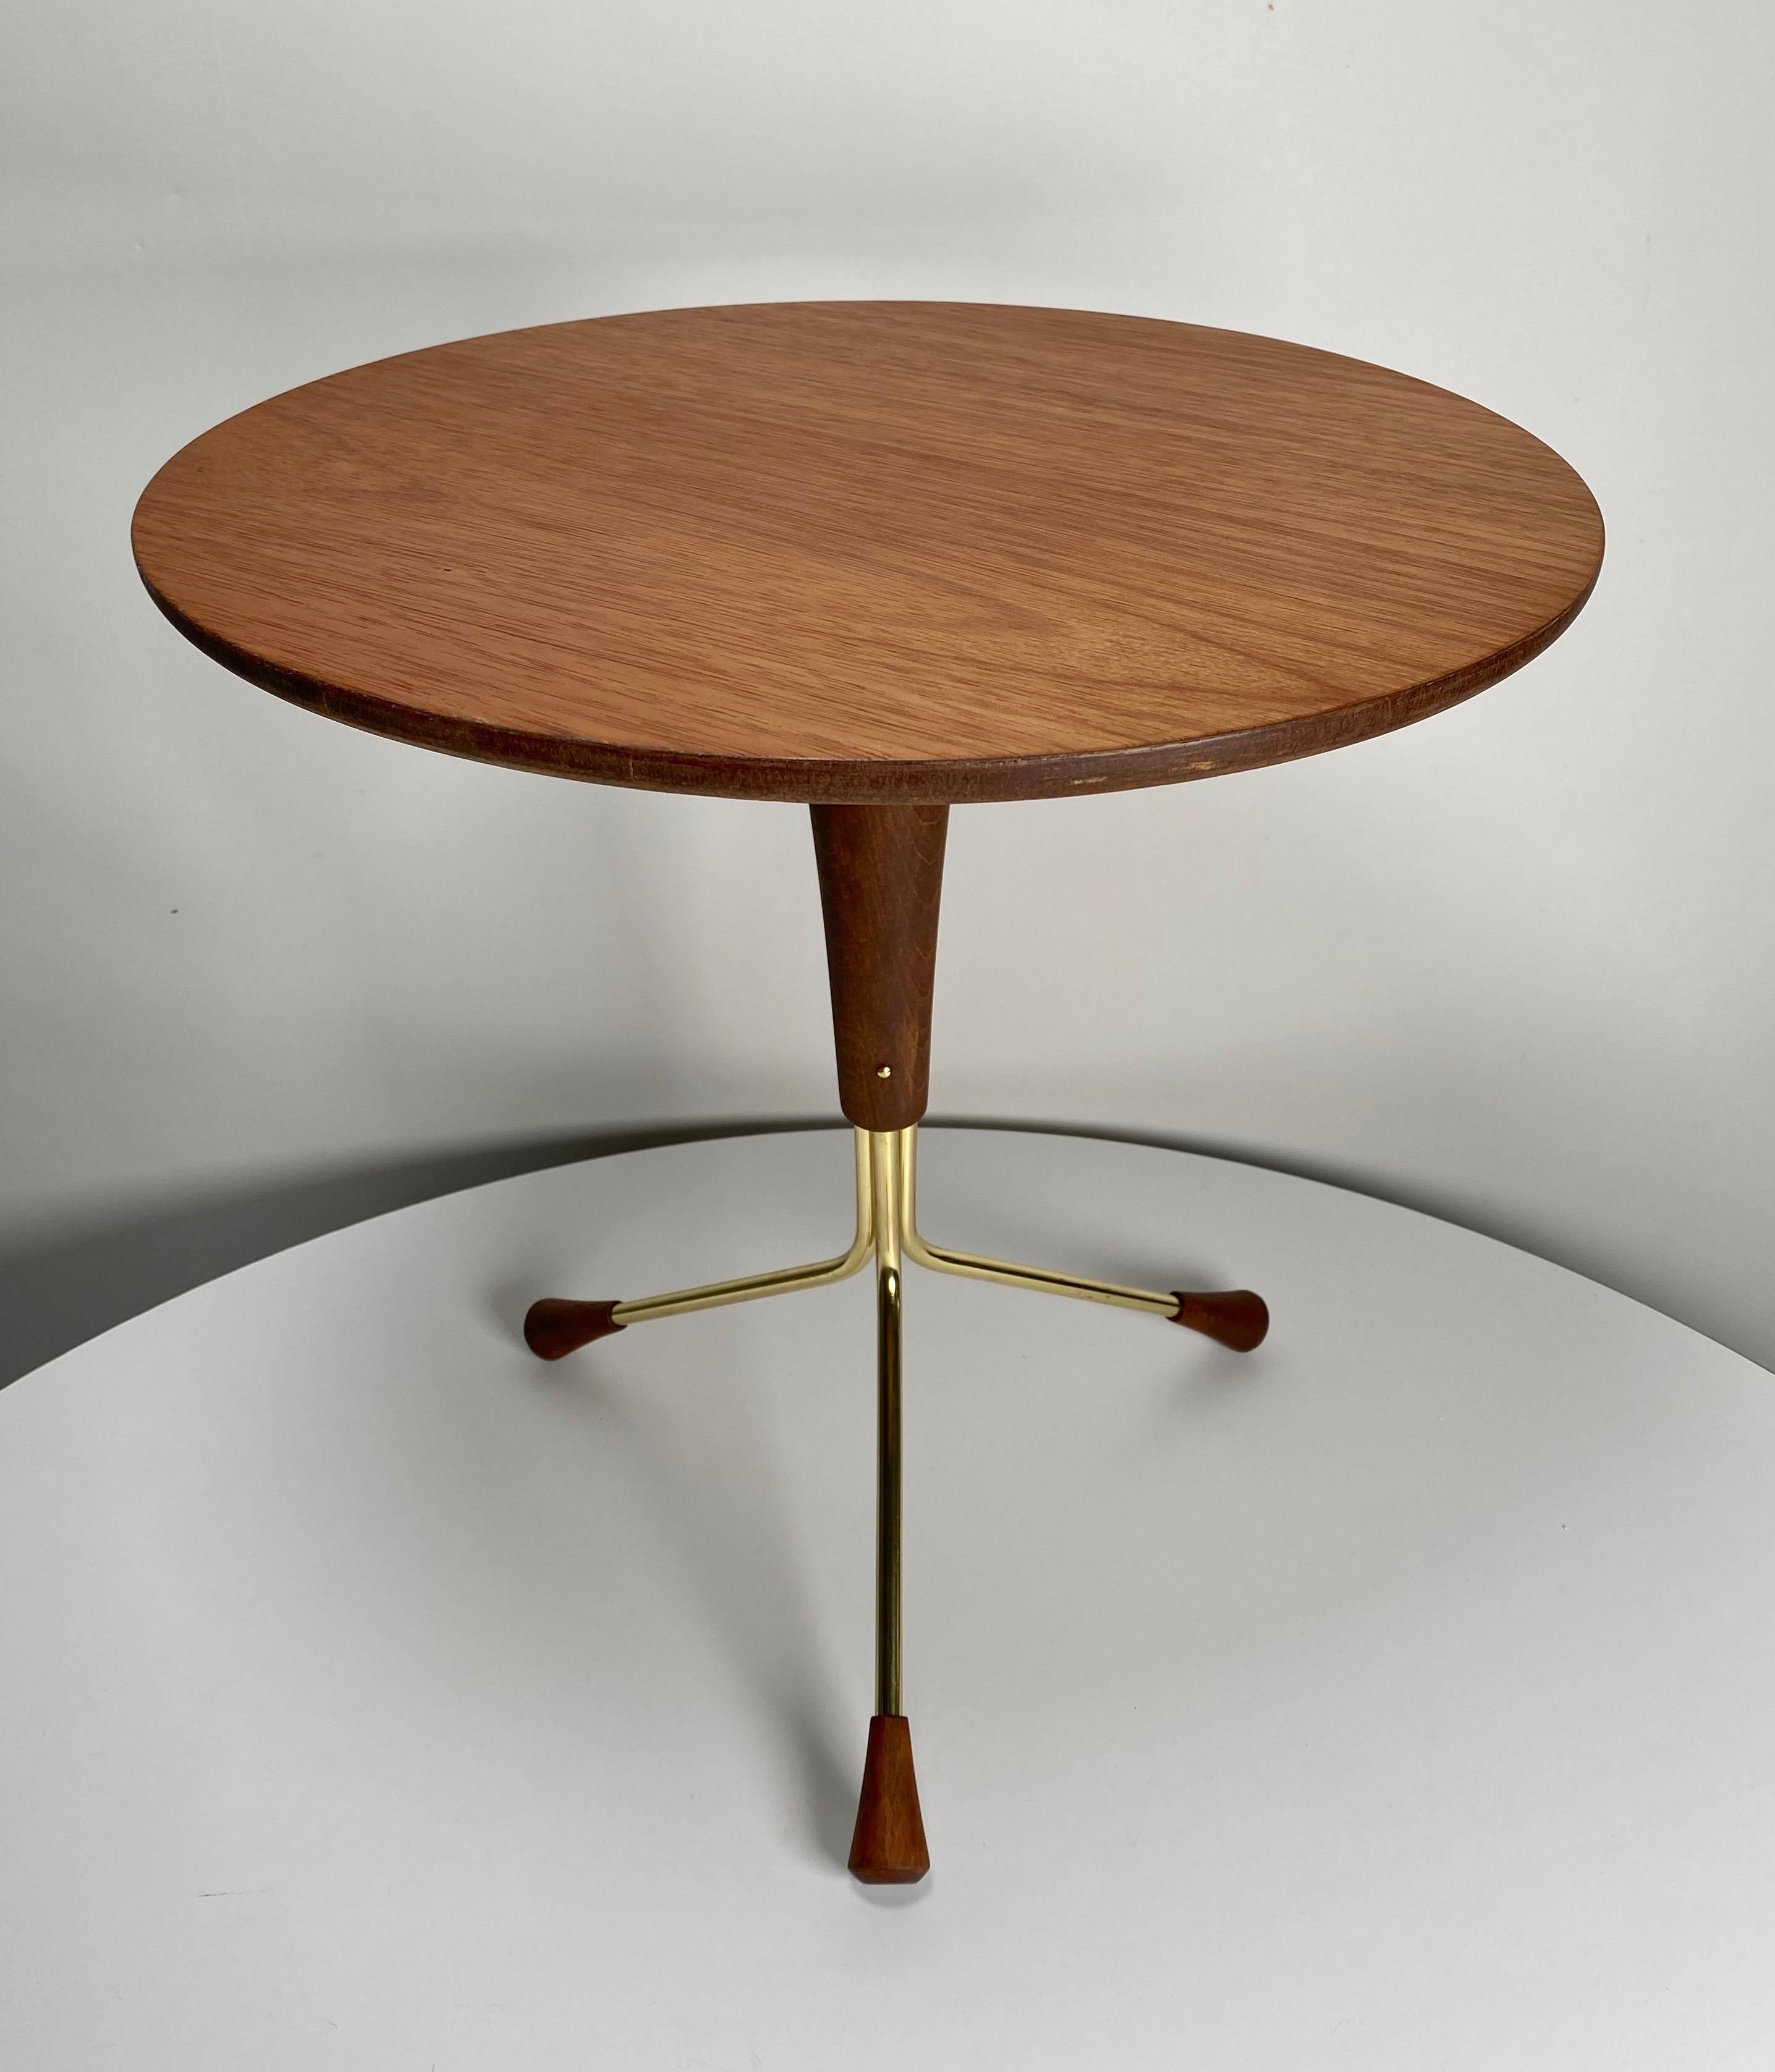 Hand-Crafted Small Tripod Base Table by Swedish Designer Alberts Larrson for Alberts Tibro